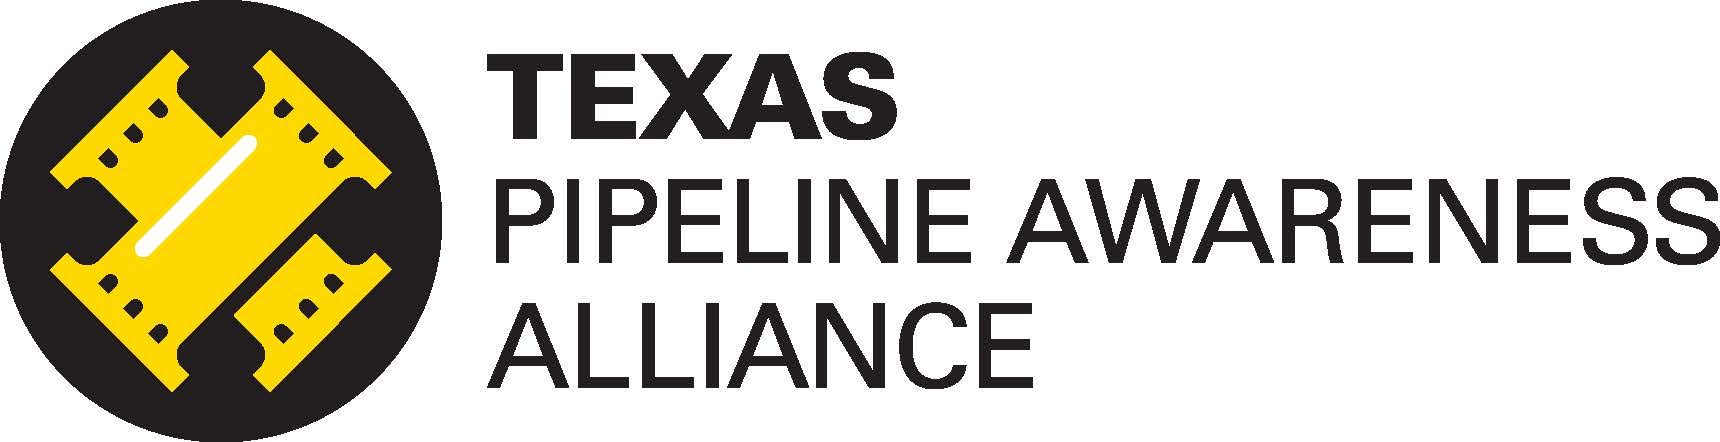 Texas Pipeline Alliance